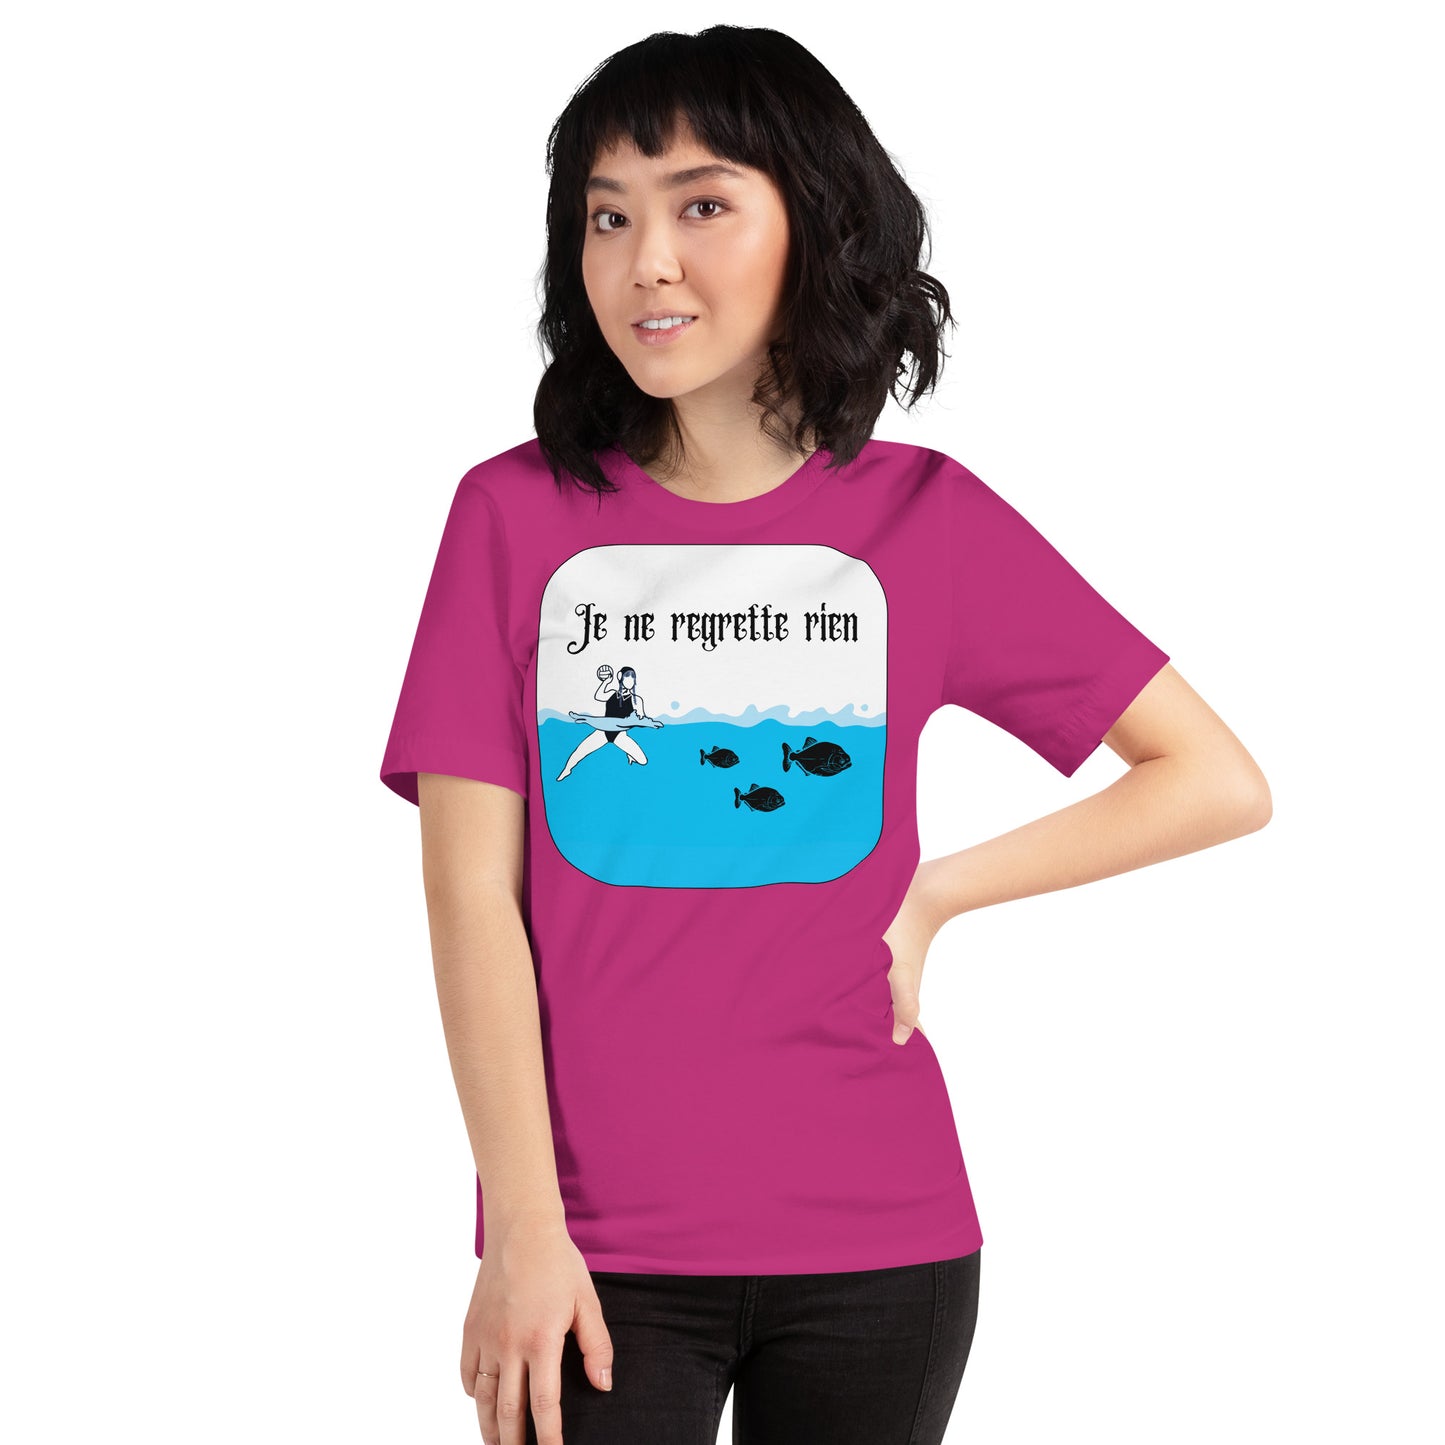 Wednesday and Piranhas - I Regret Nothing - French - Unisex Soft T-shirt - Bella Canvas 3001